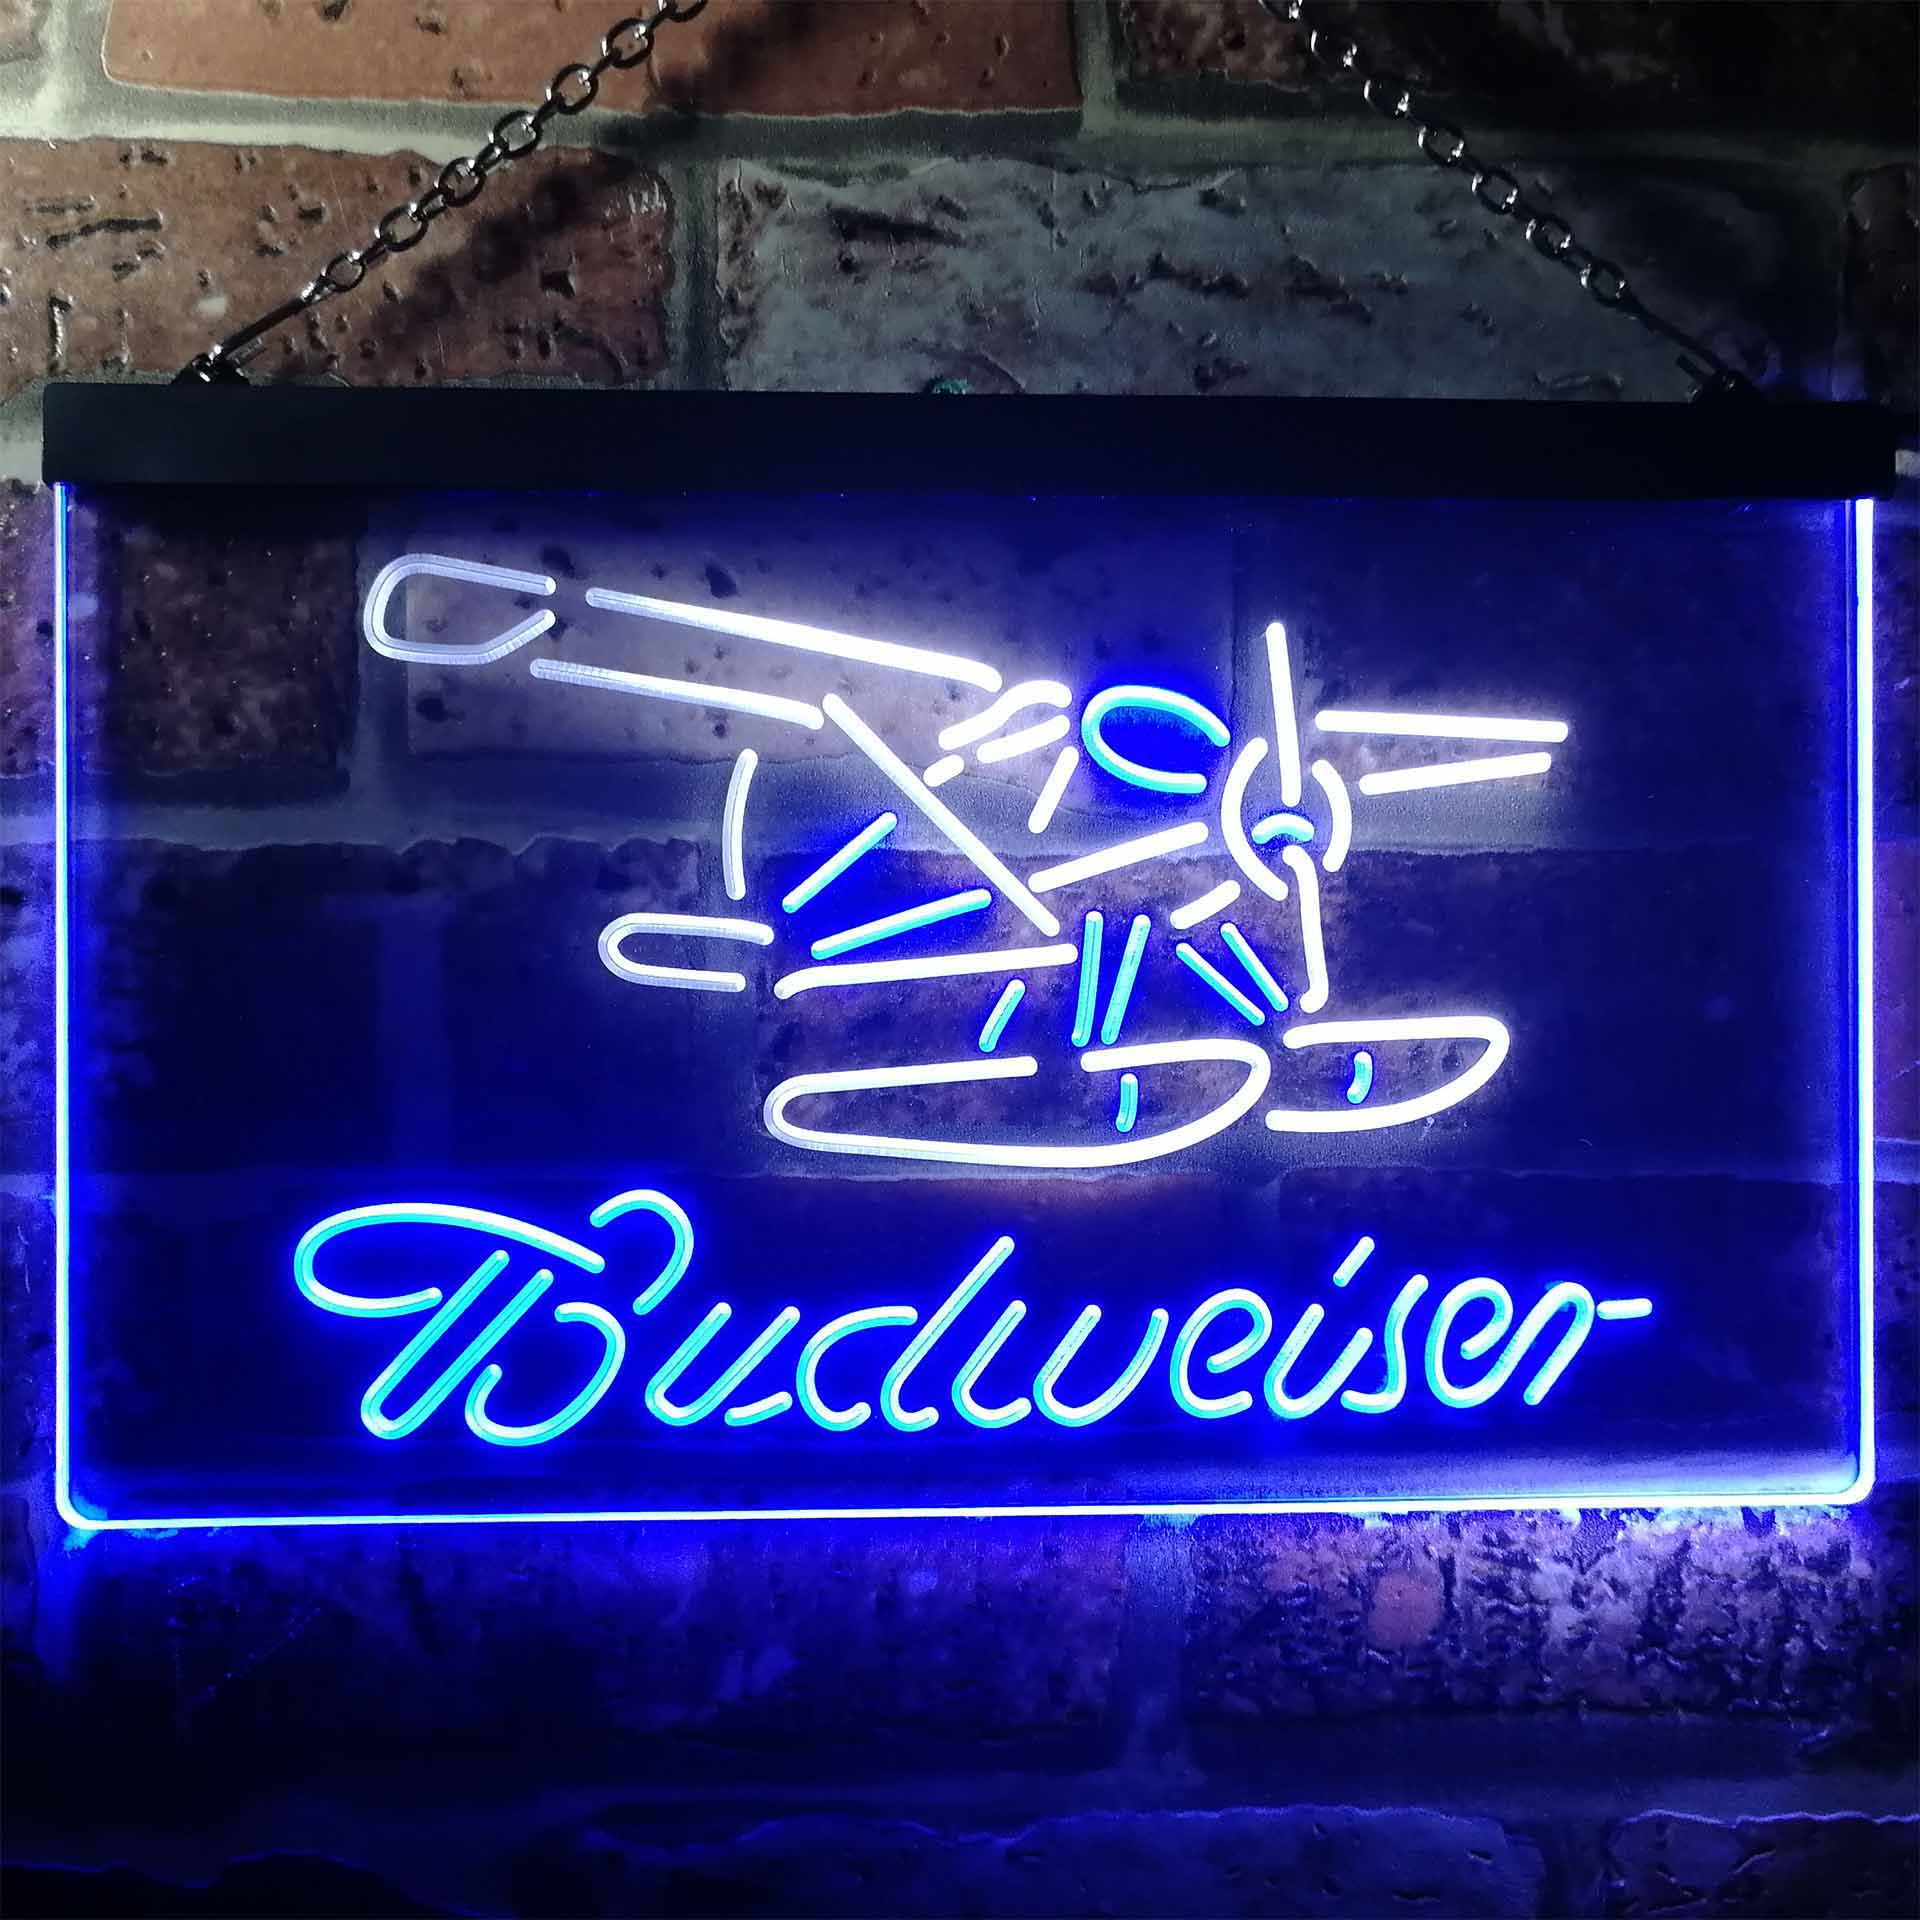 Budweiser Plane Game Room Neon LED Sign